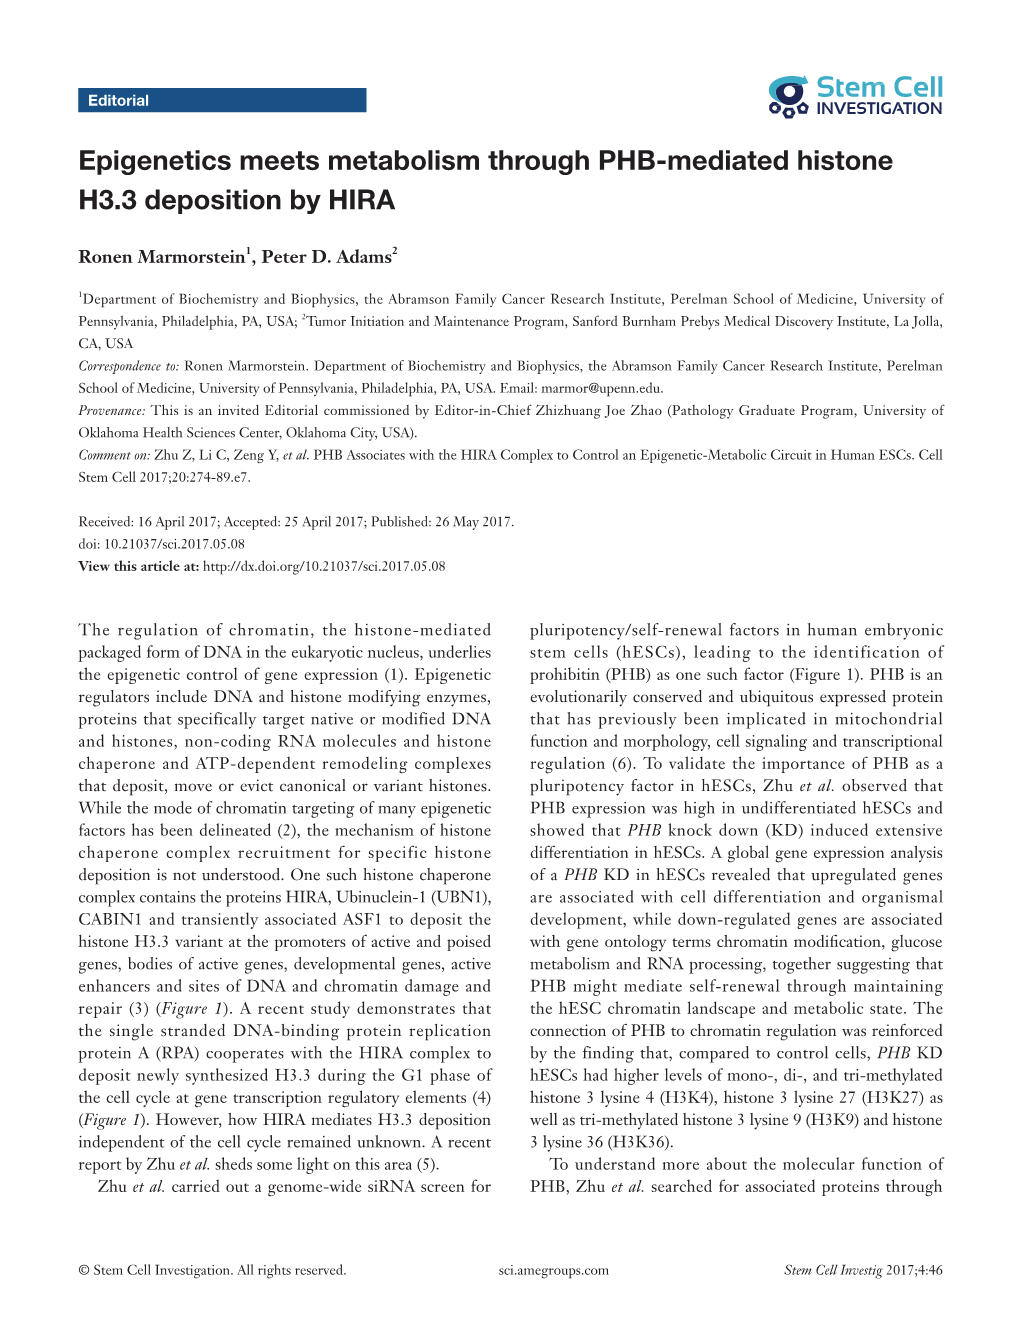 Epigenetics Meets Metabolism Through PHB-Mediated Histone H3.3 Deposition by HIRA